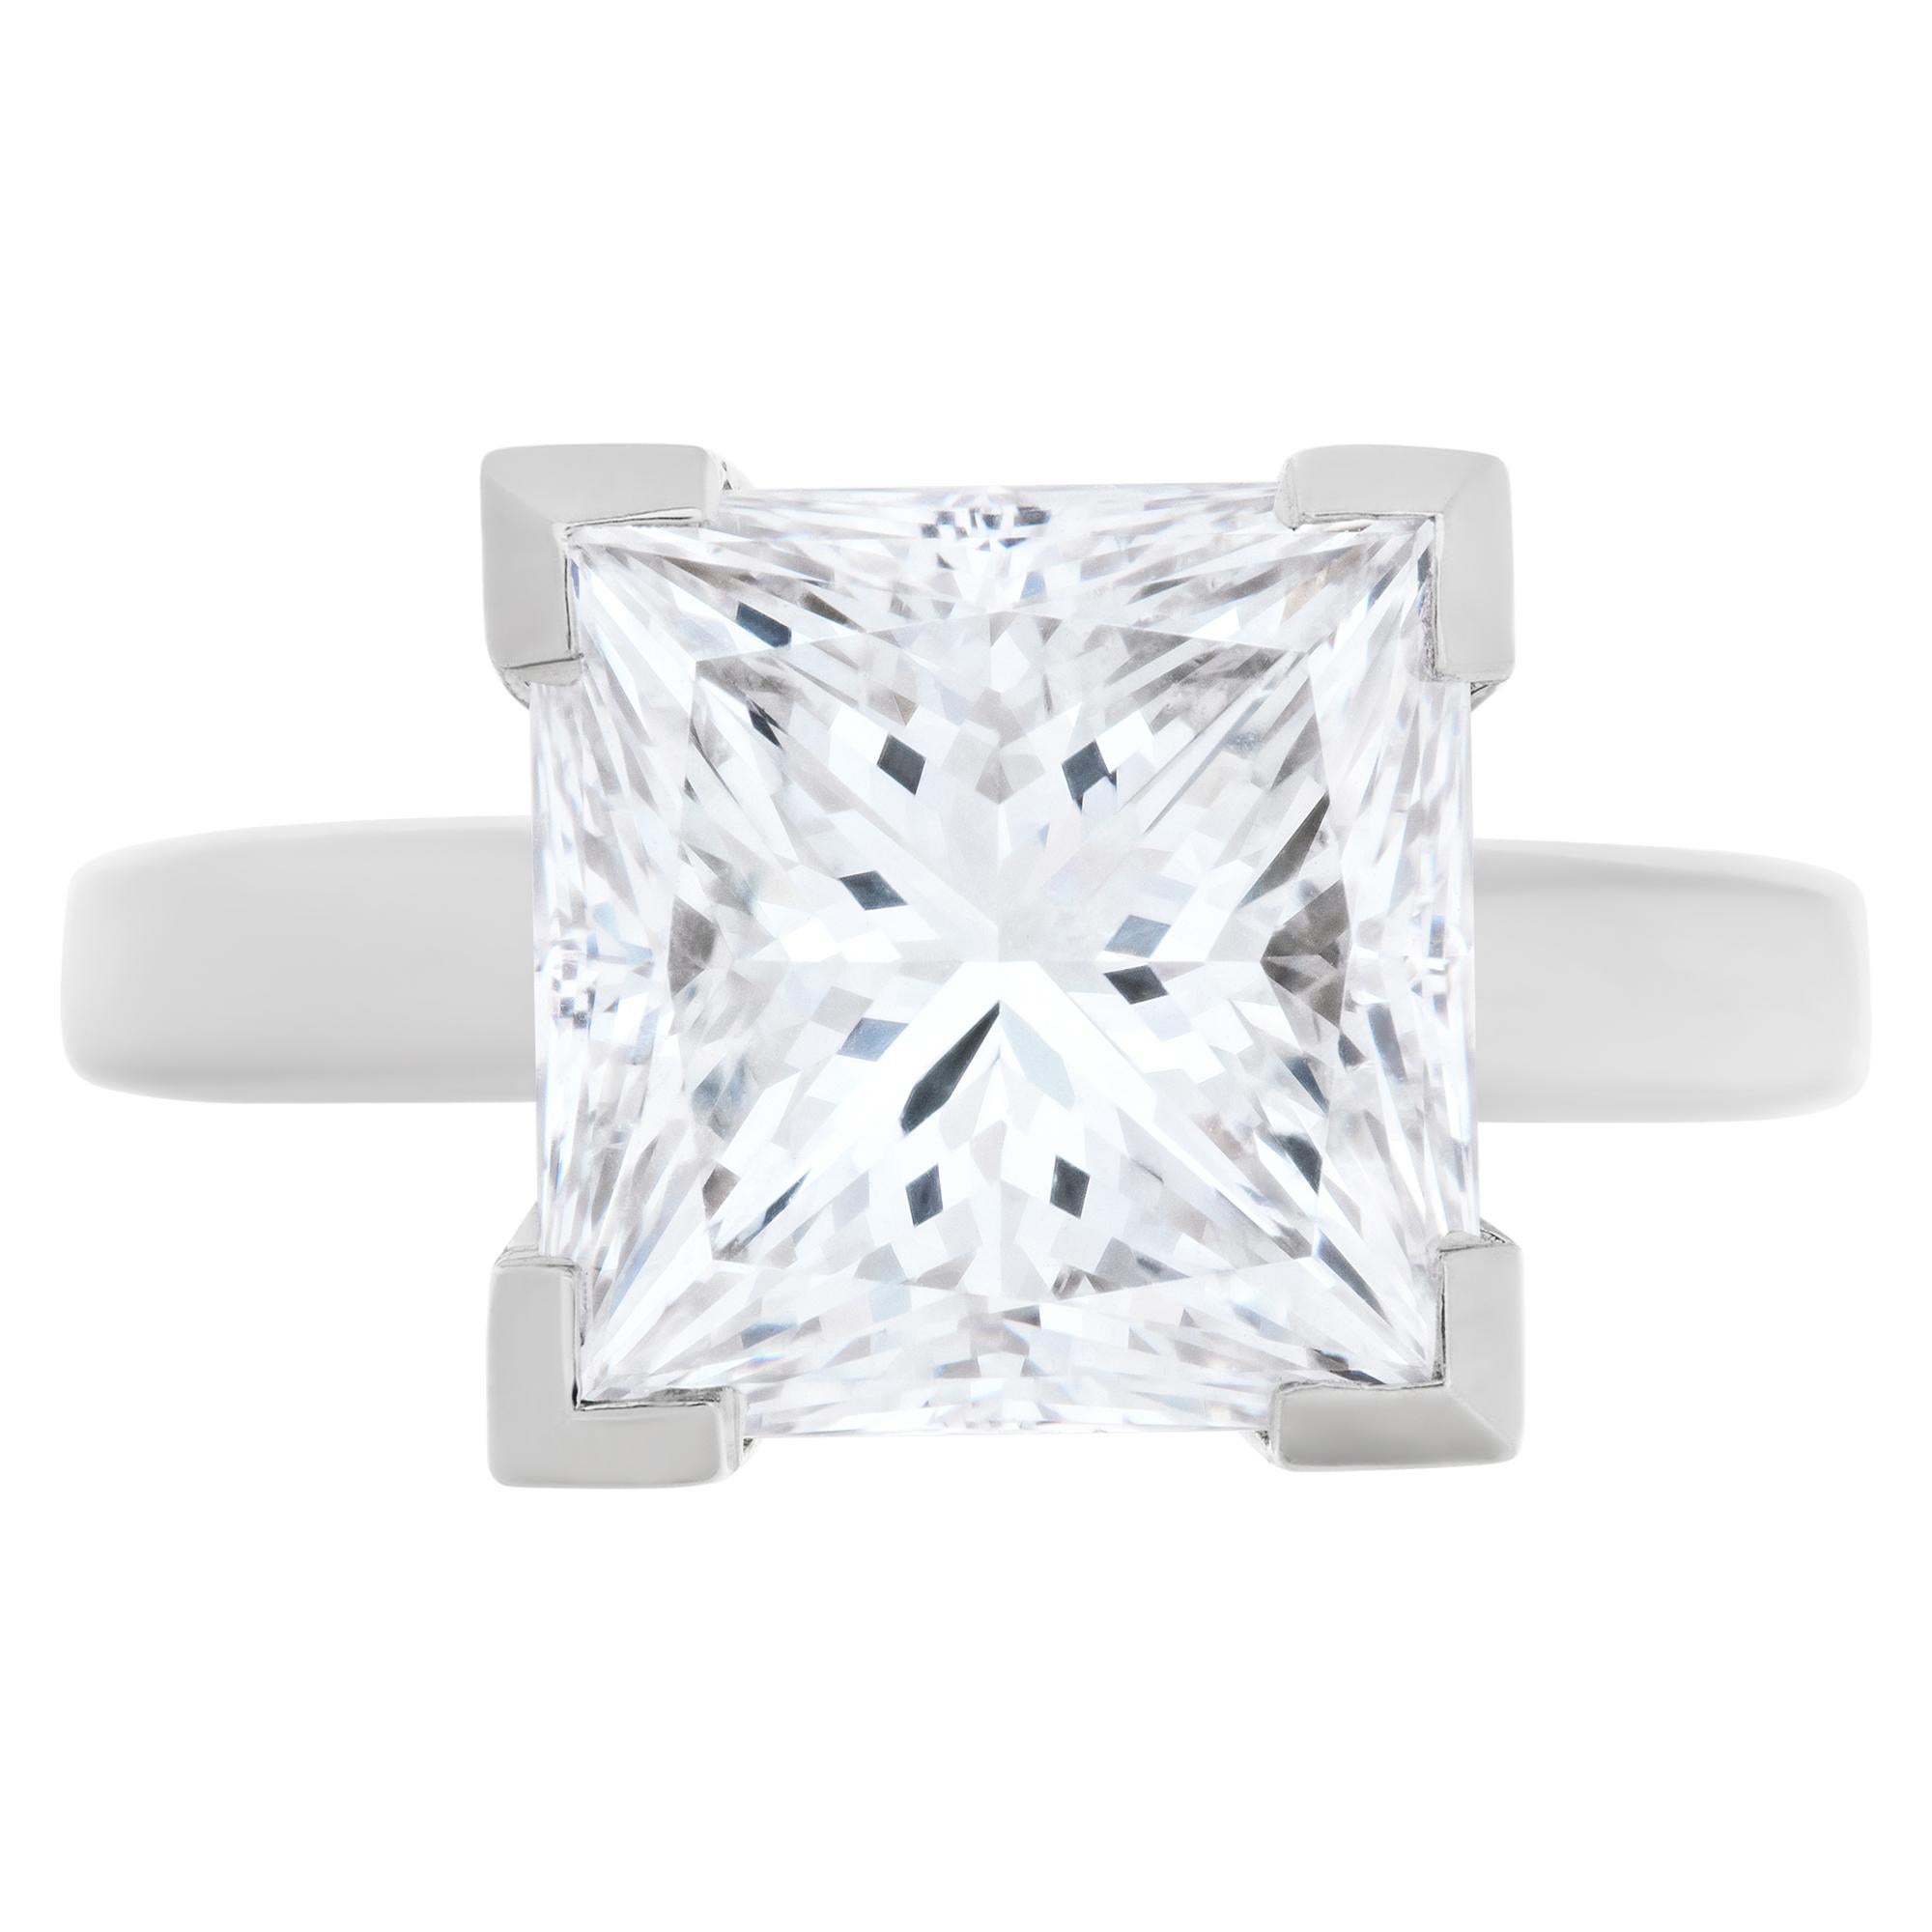 GIA certified square modified brilliant cut diamond 4.67 carat ( F color, VS2 clarity) solitaire ring set in platinum. 